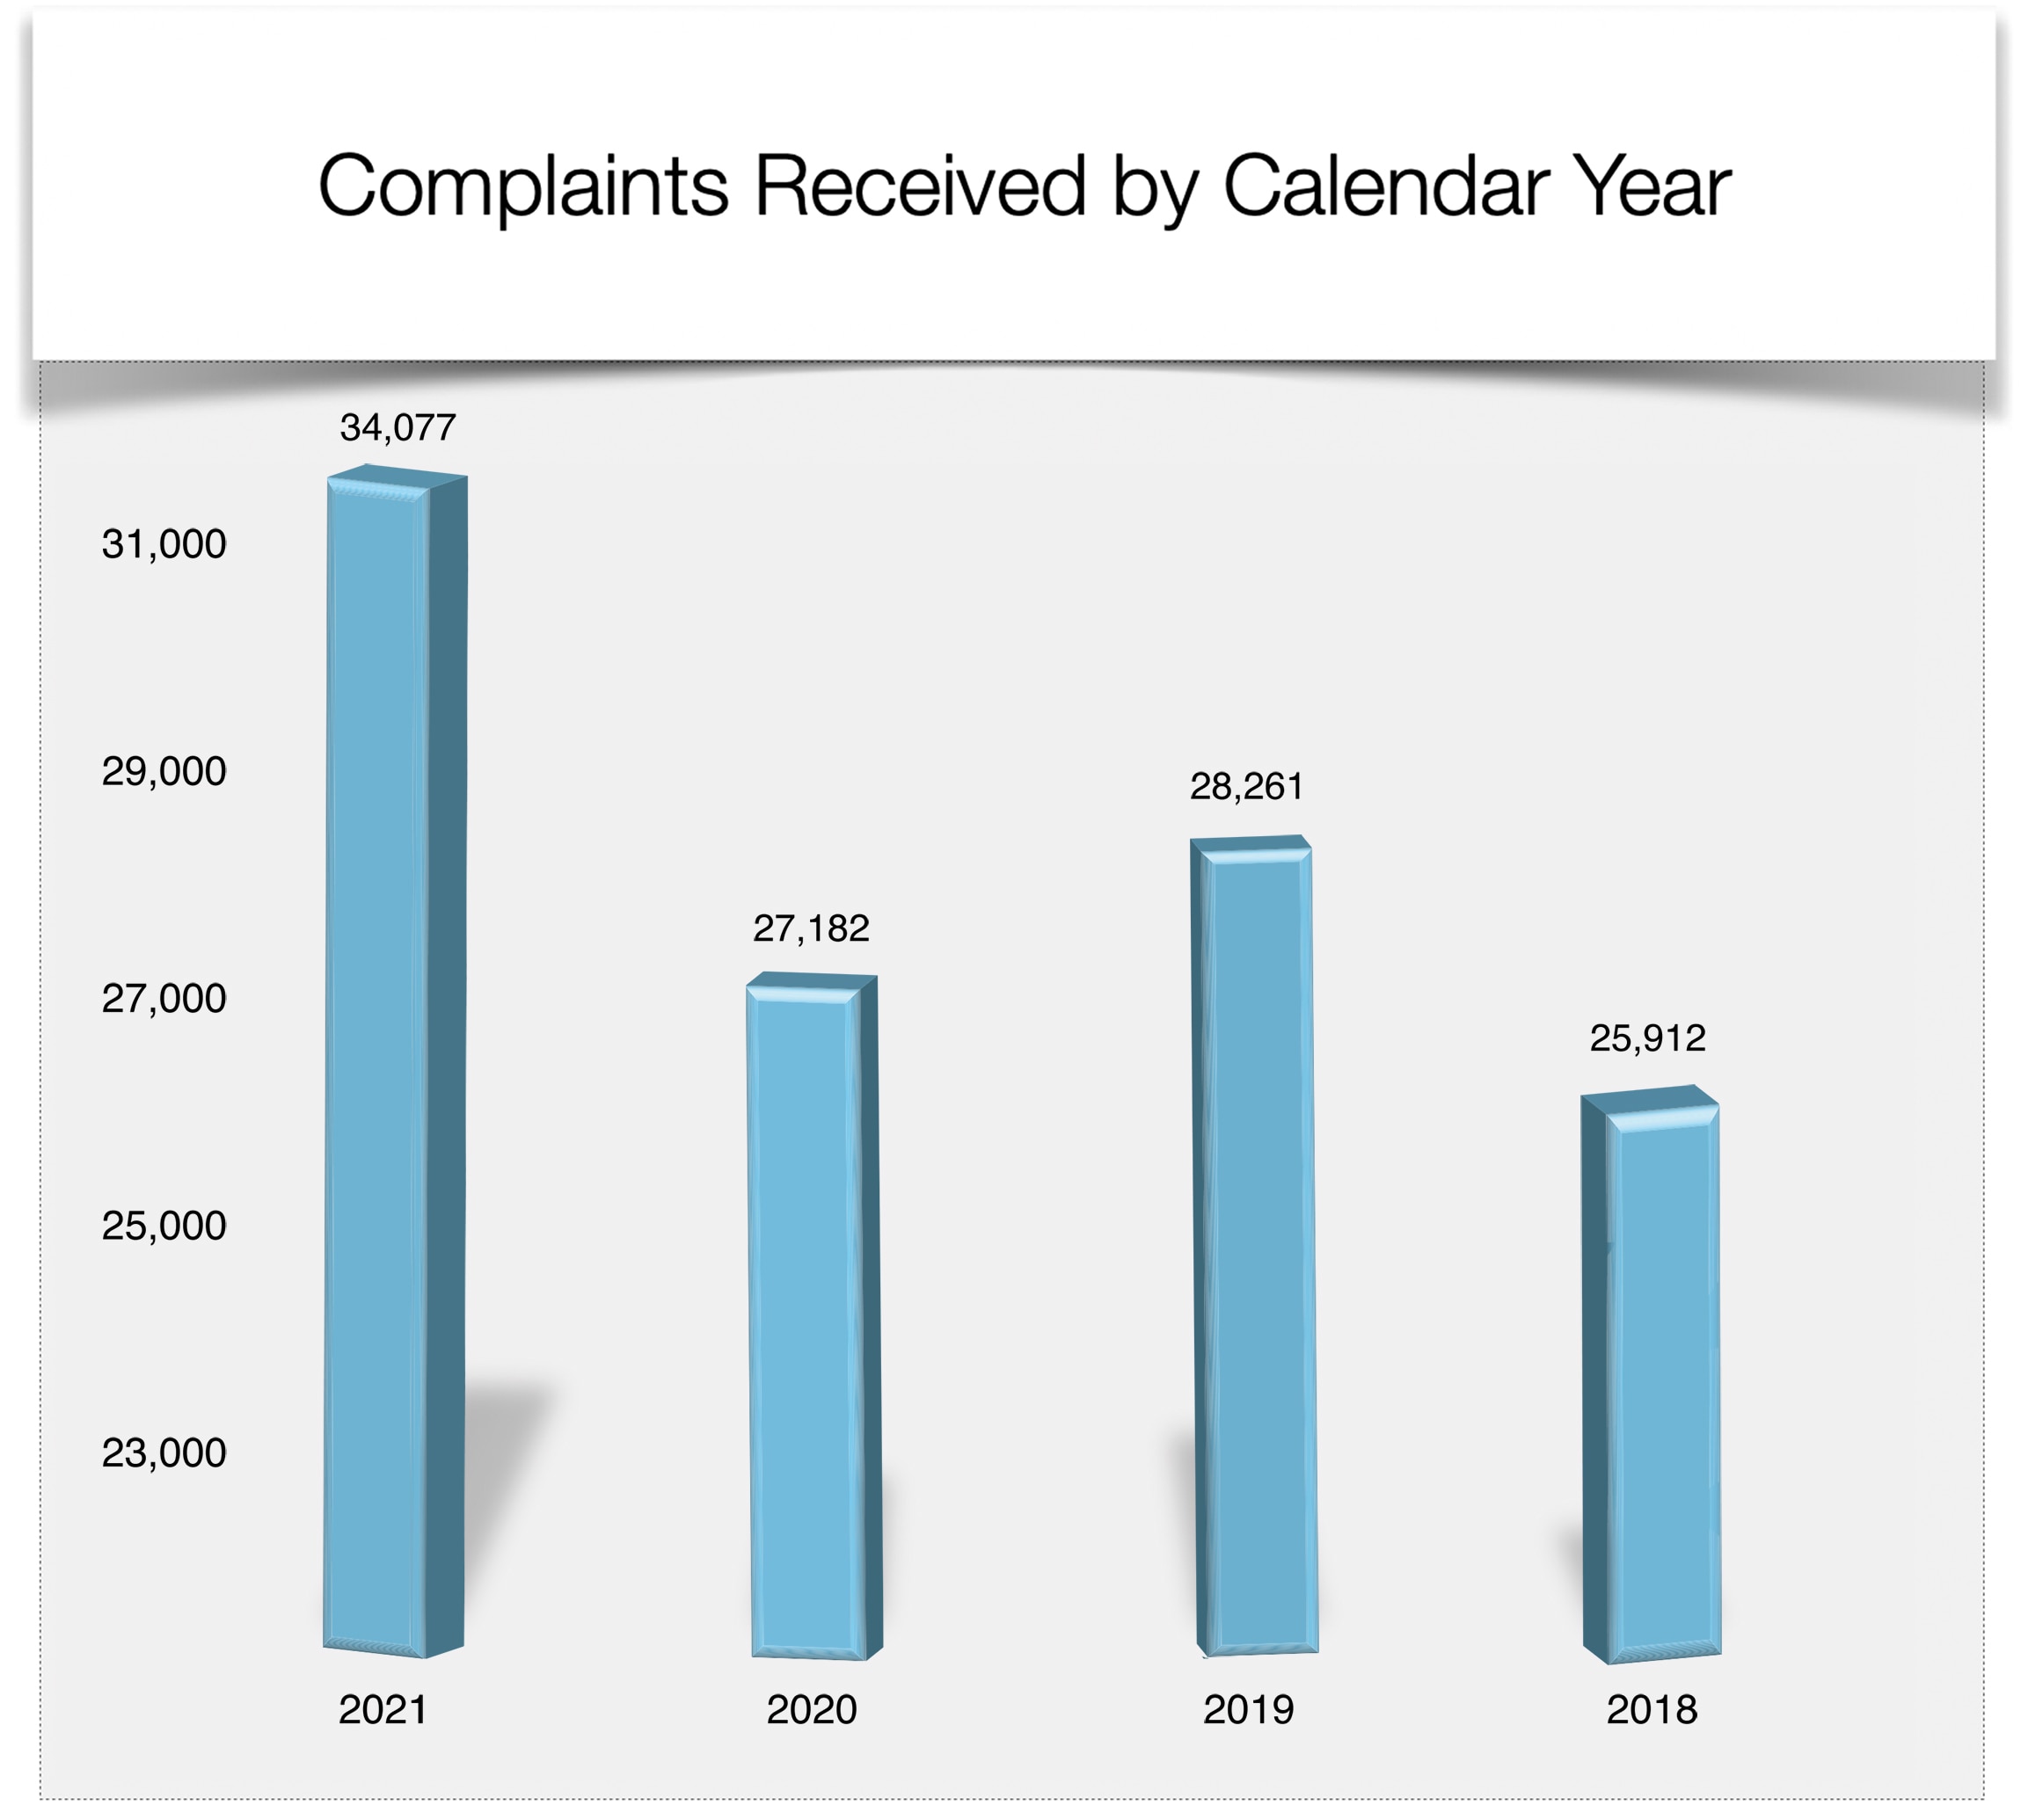 Alt text: Complaints Received by Calendar Year 2018 - 2021